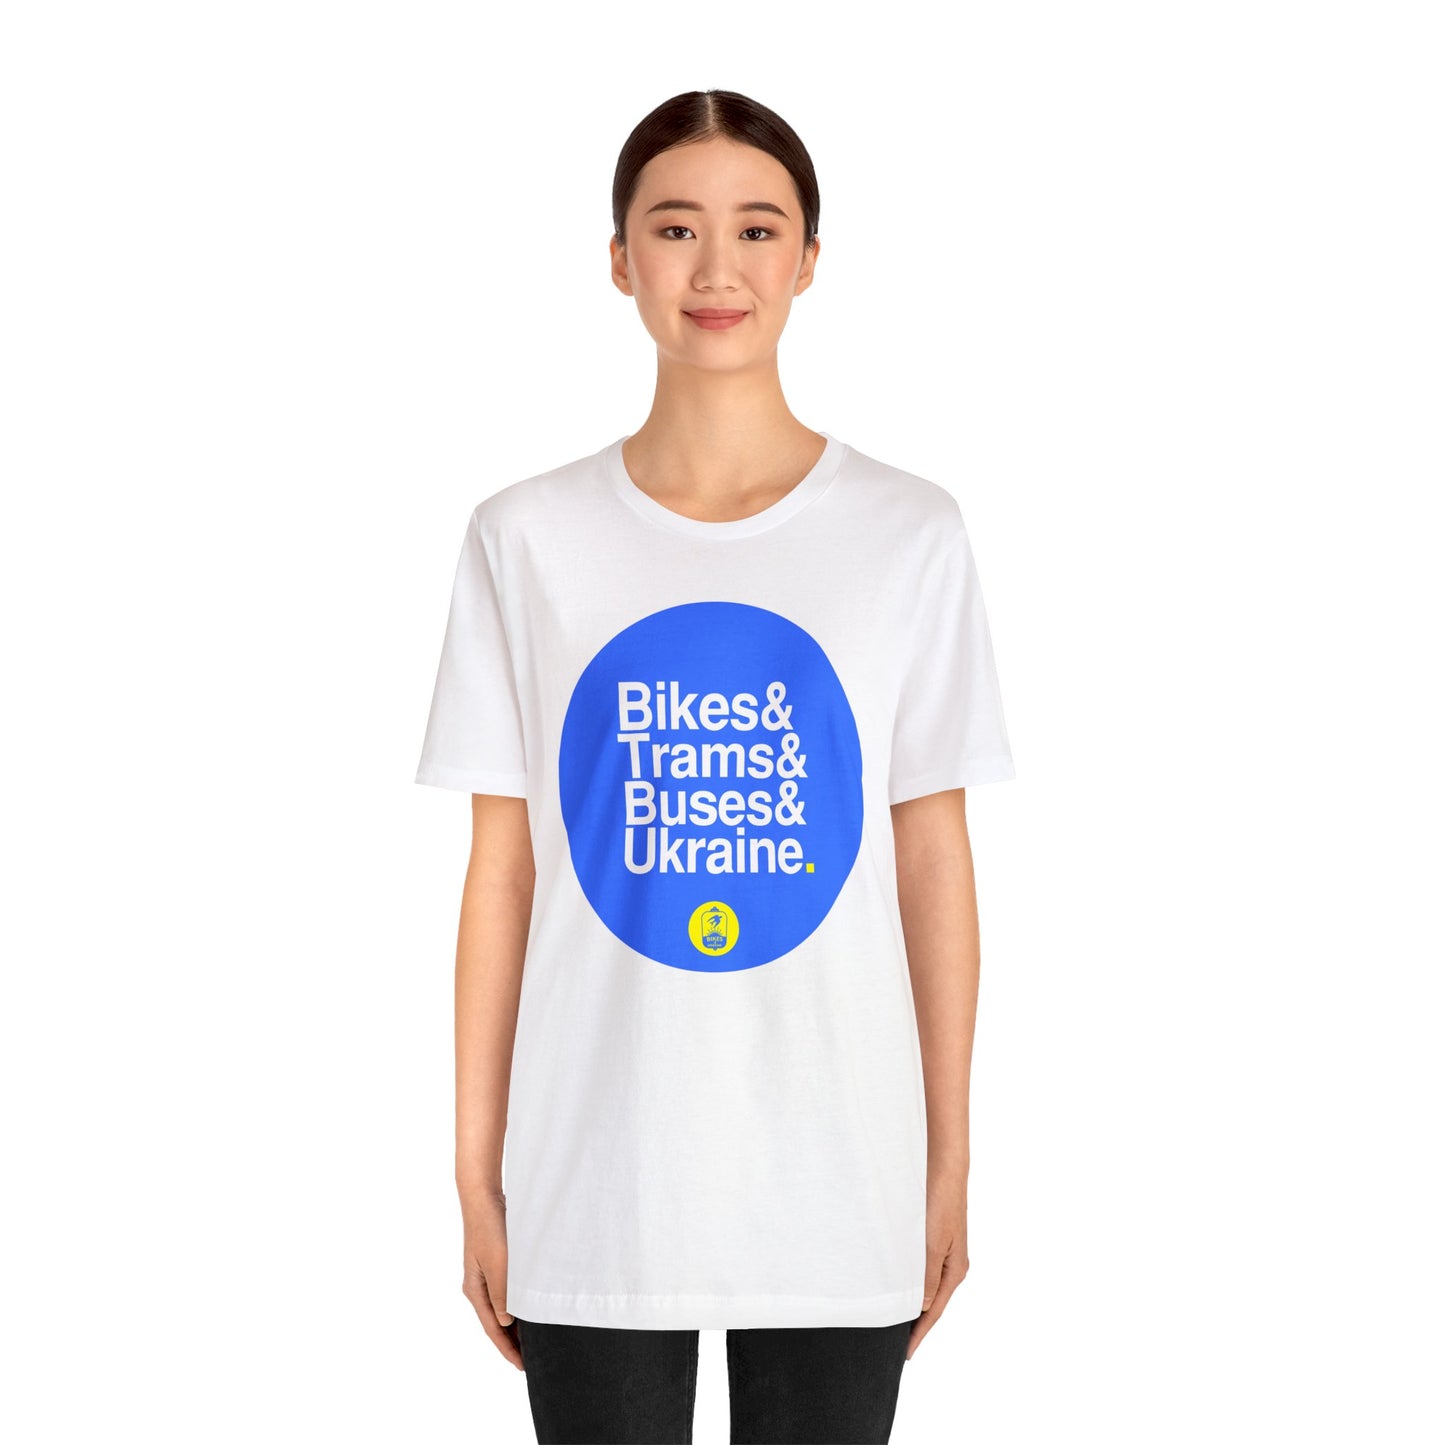 Bikes & Trams & Buses & Ukraine T-shirt - Blue - Unisex Jersey Short Sleeve Tee